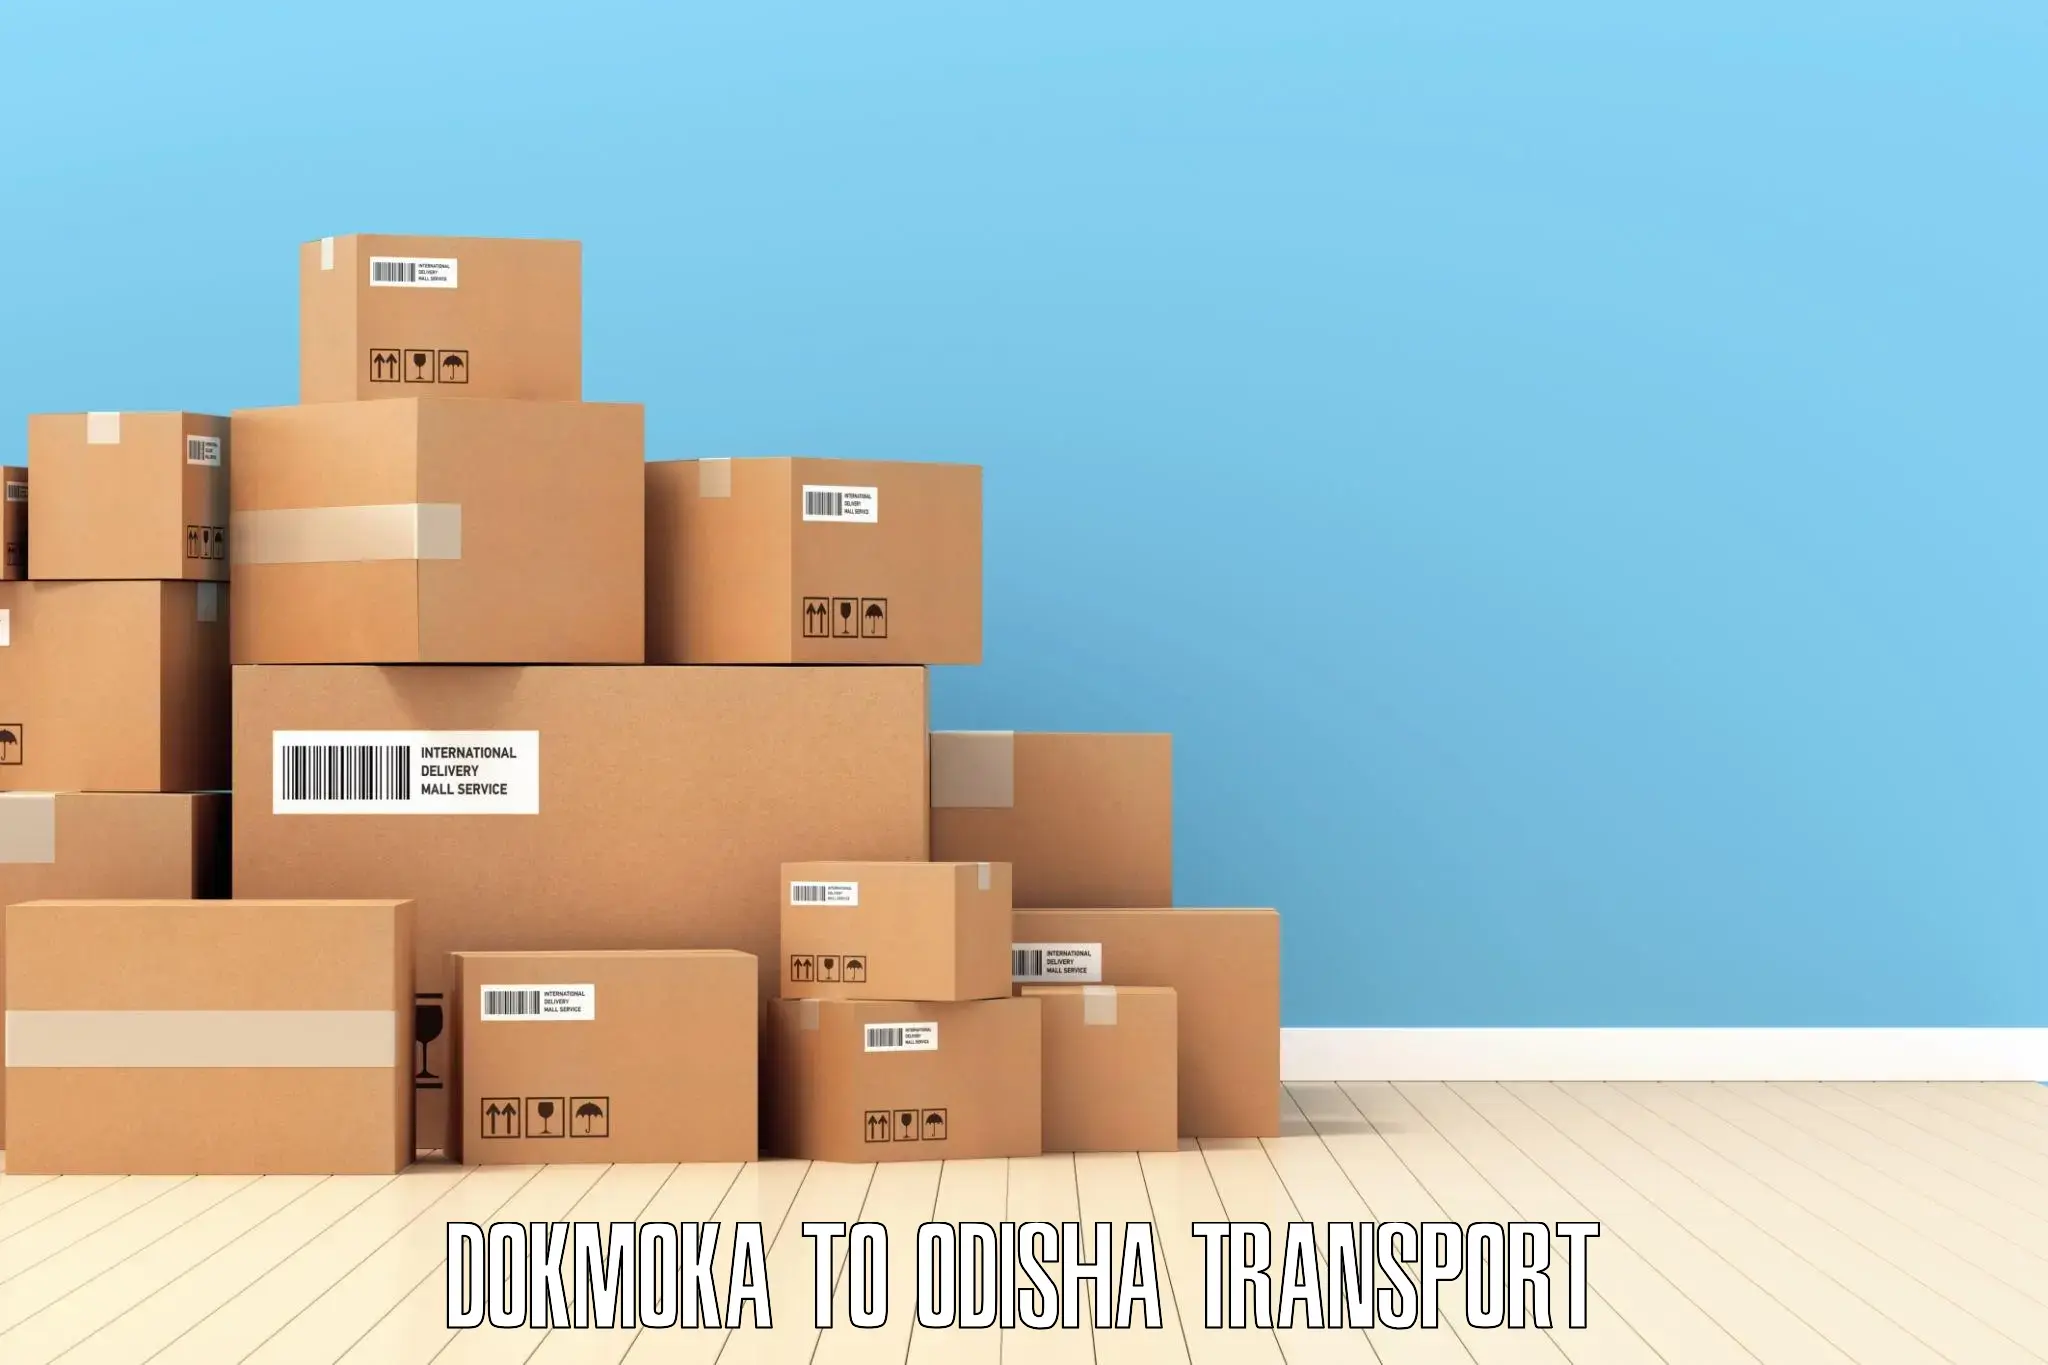 India truck logistics services Dokmoka to Sohela